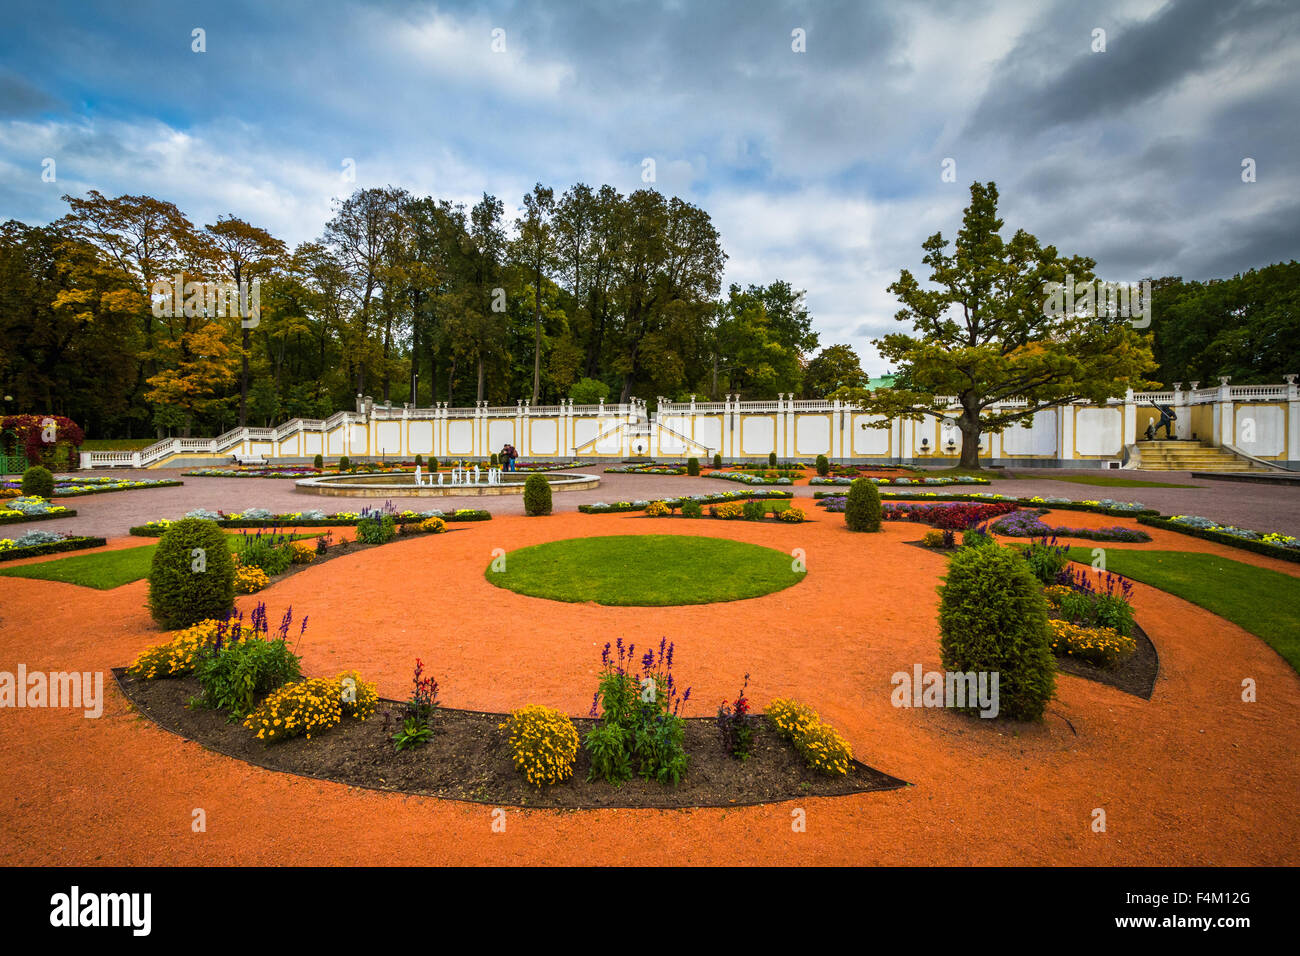 Gardens outside Kadriorg Palace, at Kadrioru Park, in Tallinn, Estonia. Stock Photo